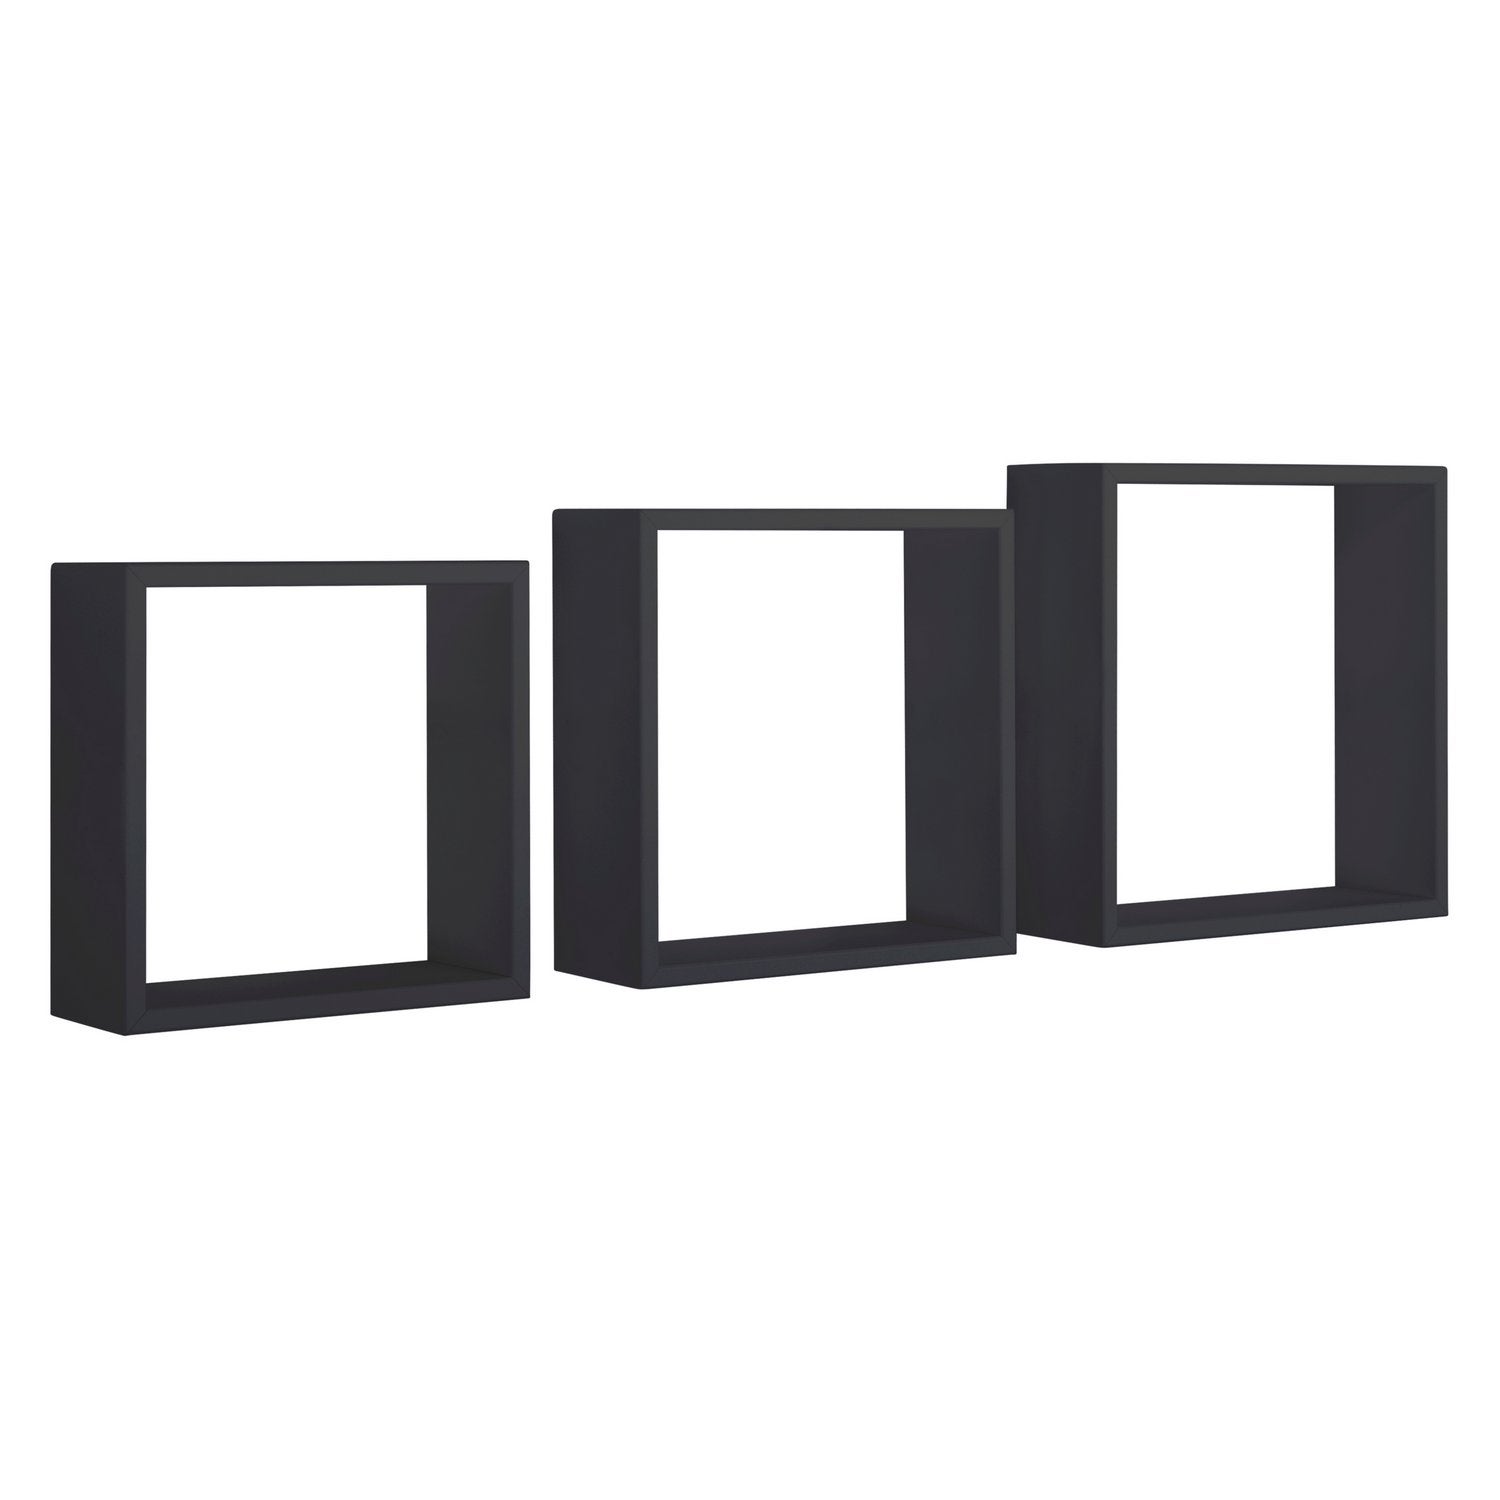 Mensole muro Moderne cubo Set 3pz QUADRATE legno NERO modulo scaffale da  Parete 30x30-25x25-20x20 P. 9 cm